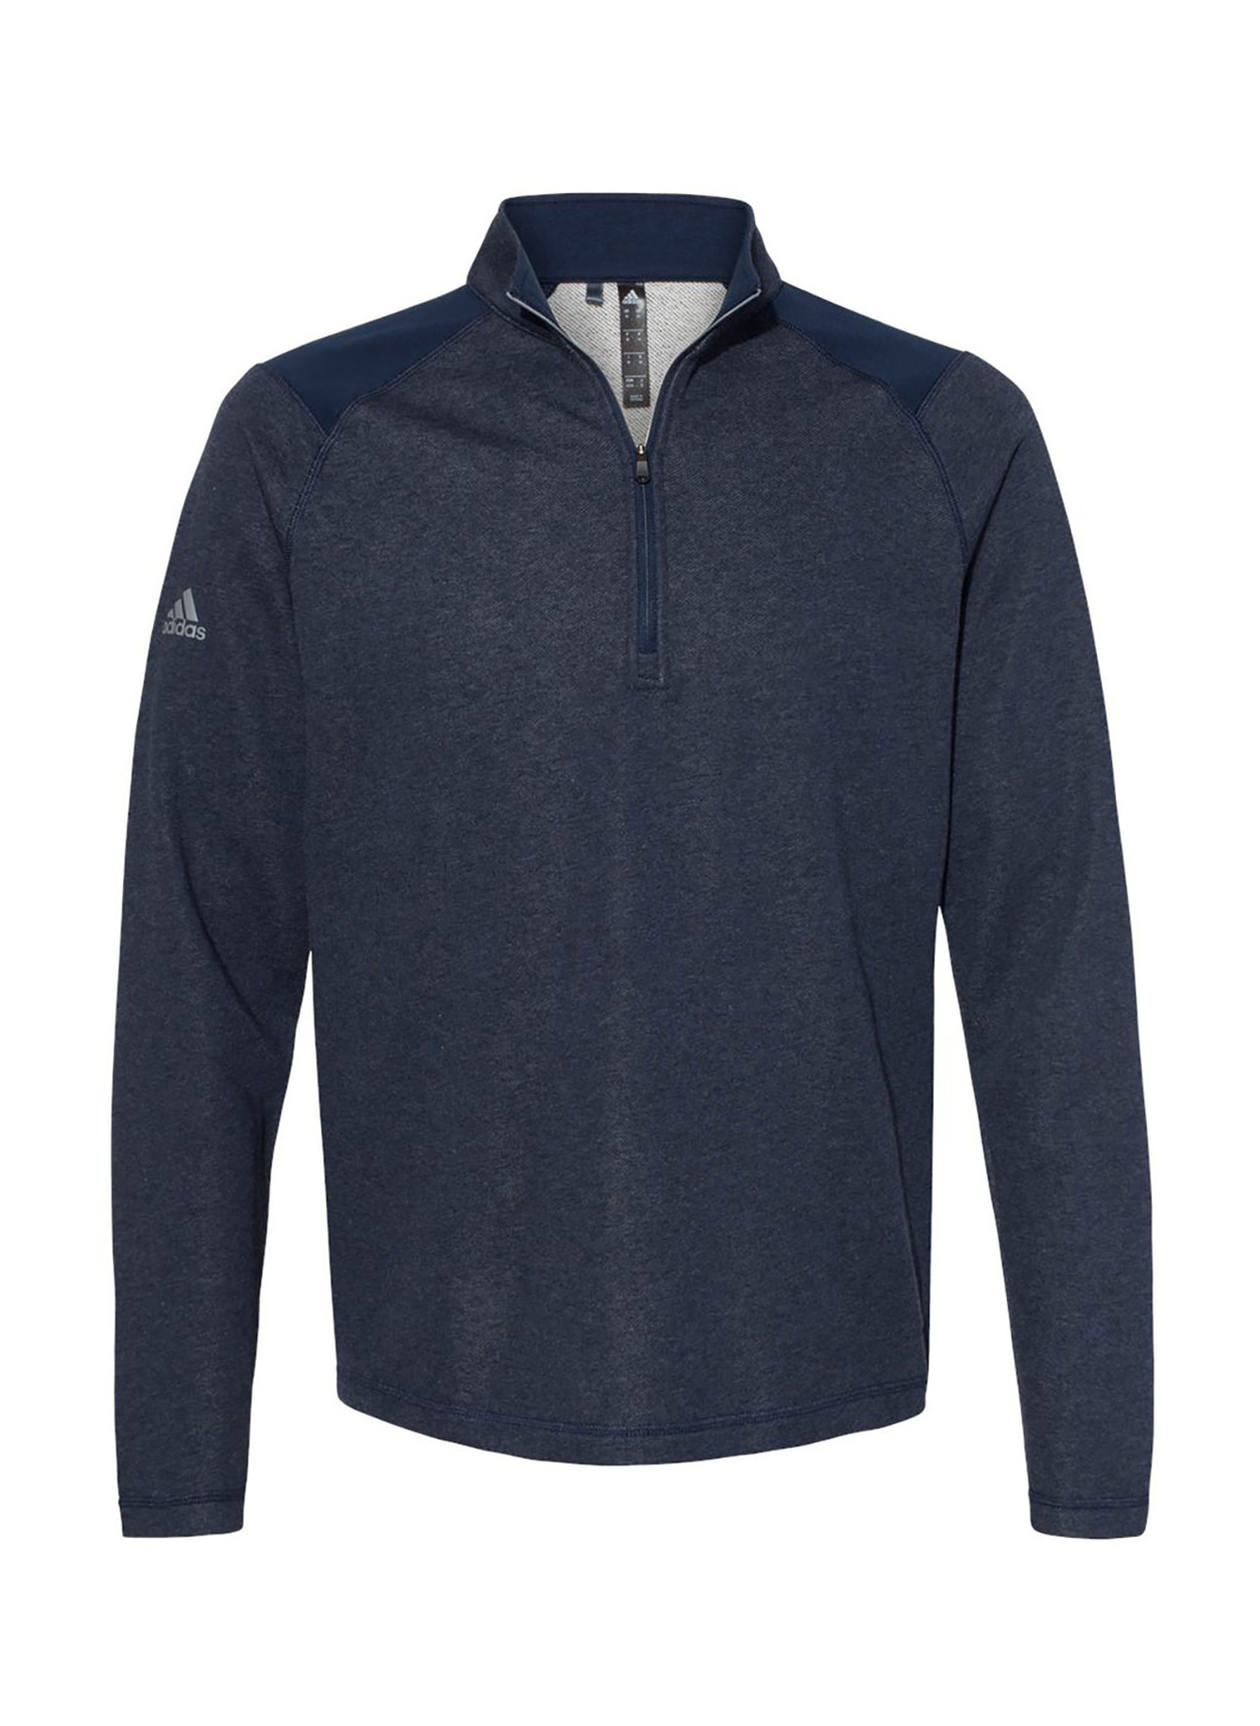 Adidas Heathered Quarter-Zip Pullover With Colorblocked Shoulders Men's Collegiate Navy Heather